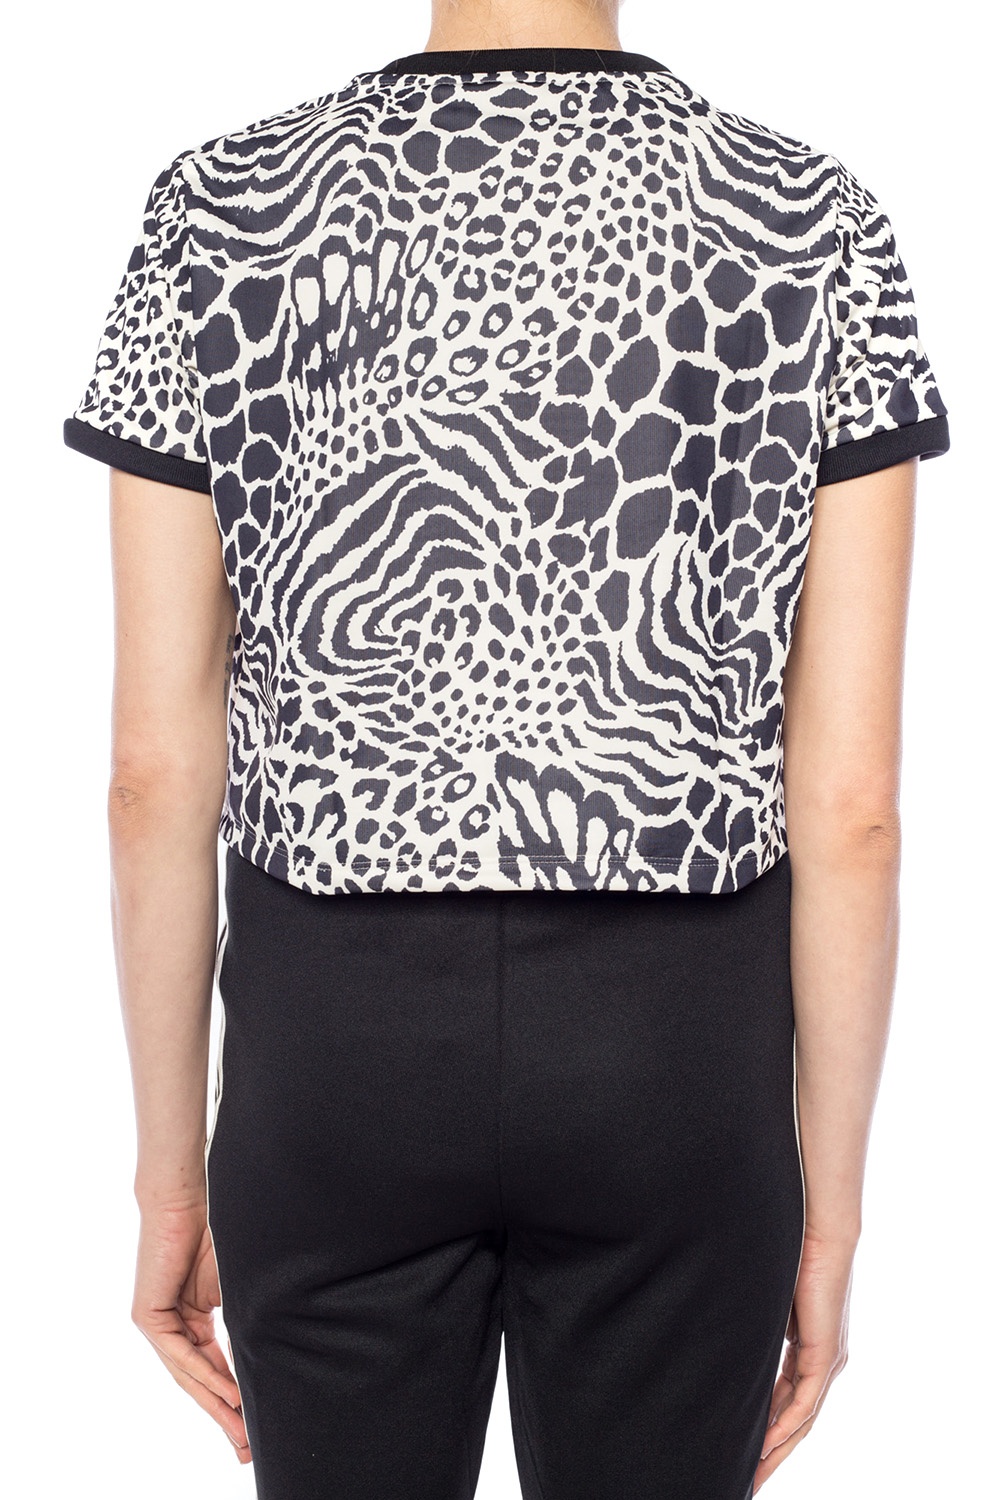 Leopard print T-shirt ADIDAS Originals - Vitkac GB